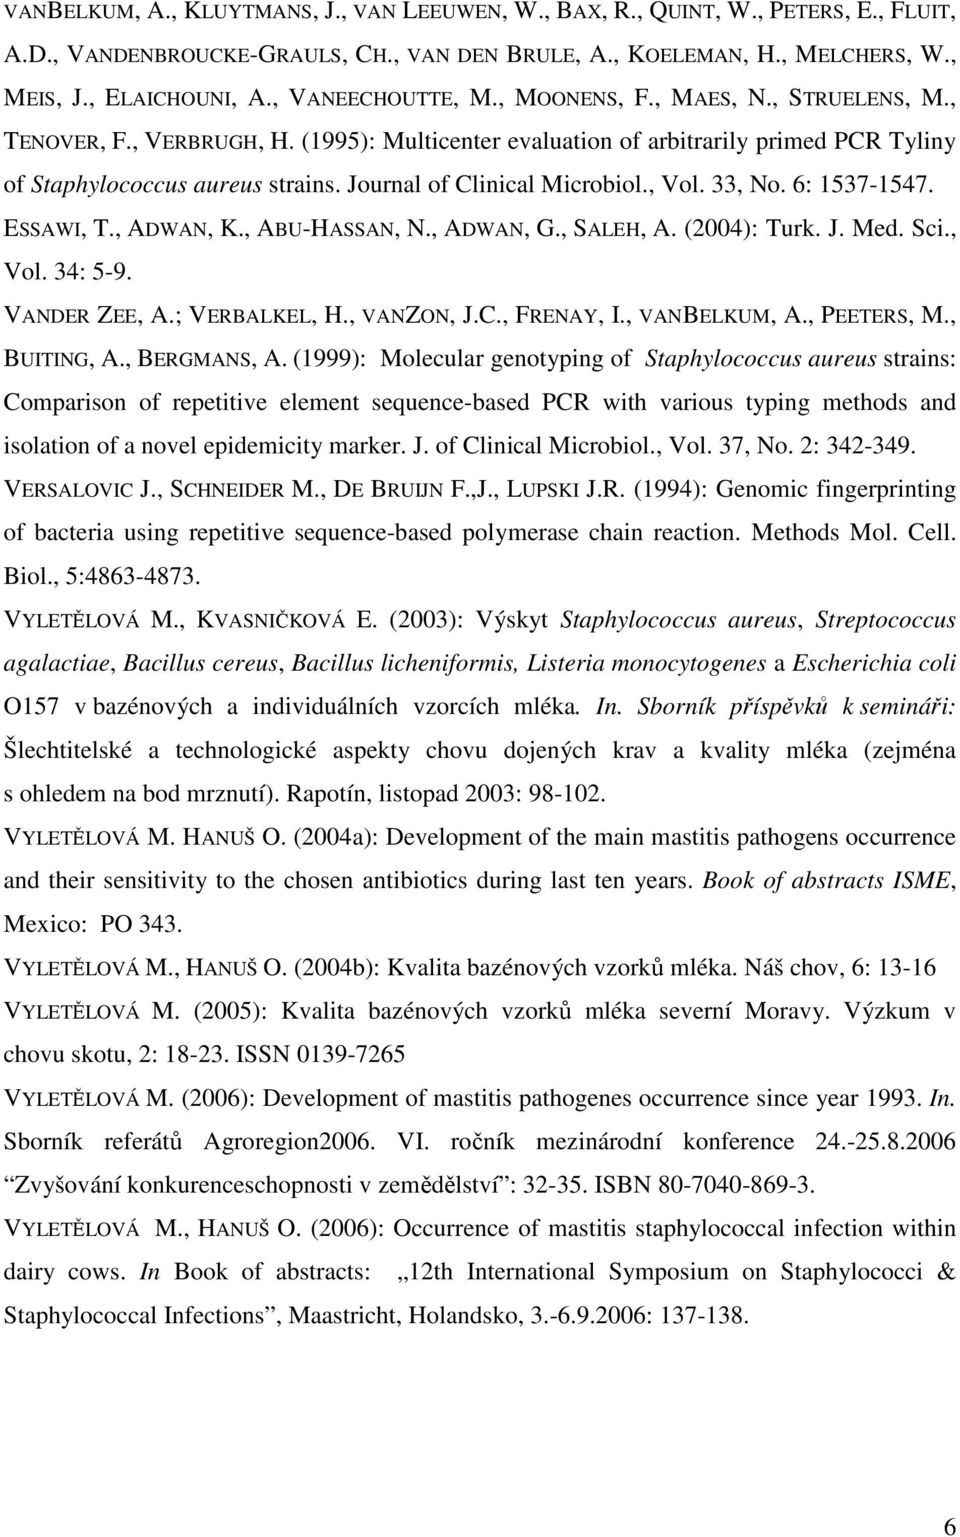 Journal of Clinical Microbiol., Vol. 33, No. 6: 1537-1547. ESSAWI, T., ADWAN, K., ABU-HASSAN, N., ADWAN, G., SALEH, A. (2004): Turk. J. Med. Sci., Vol. 34: 5-9. VANDER ZEE, A.; VERBALKEL, H.